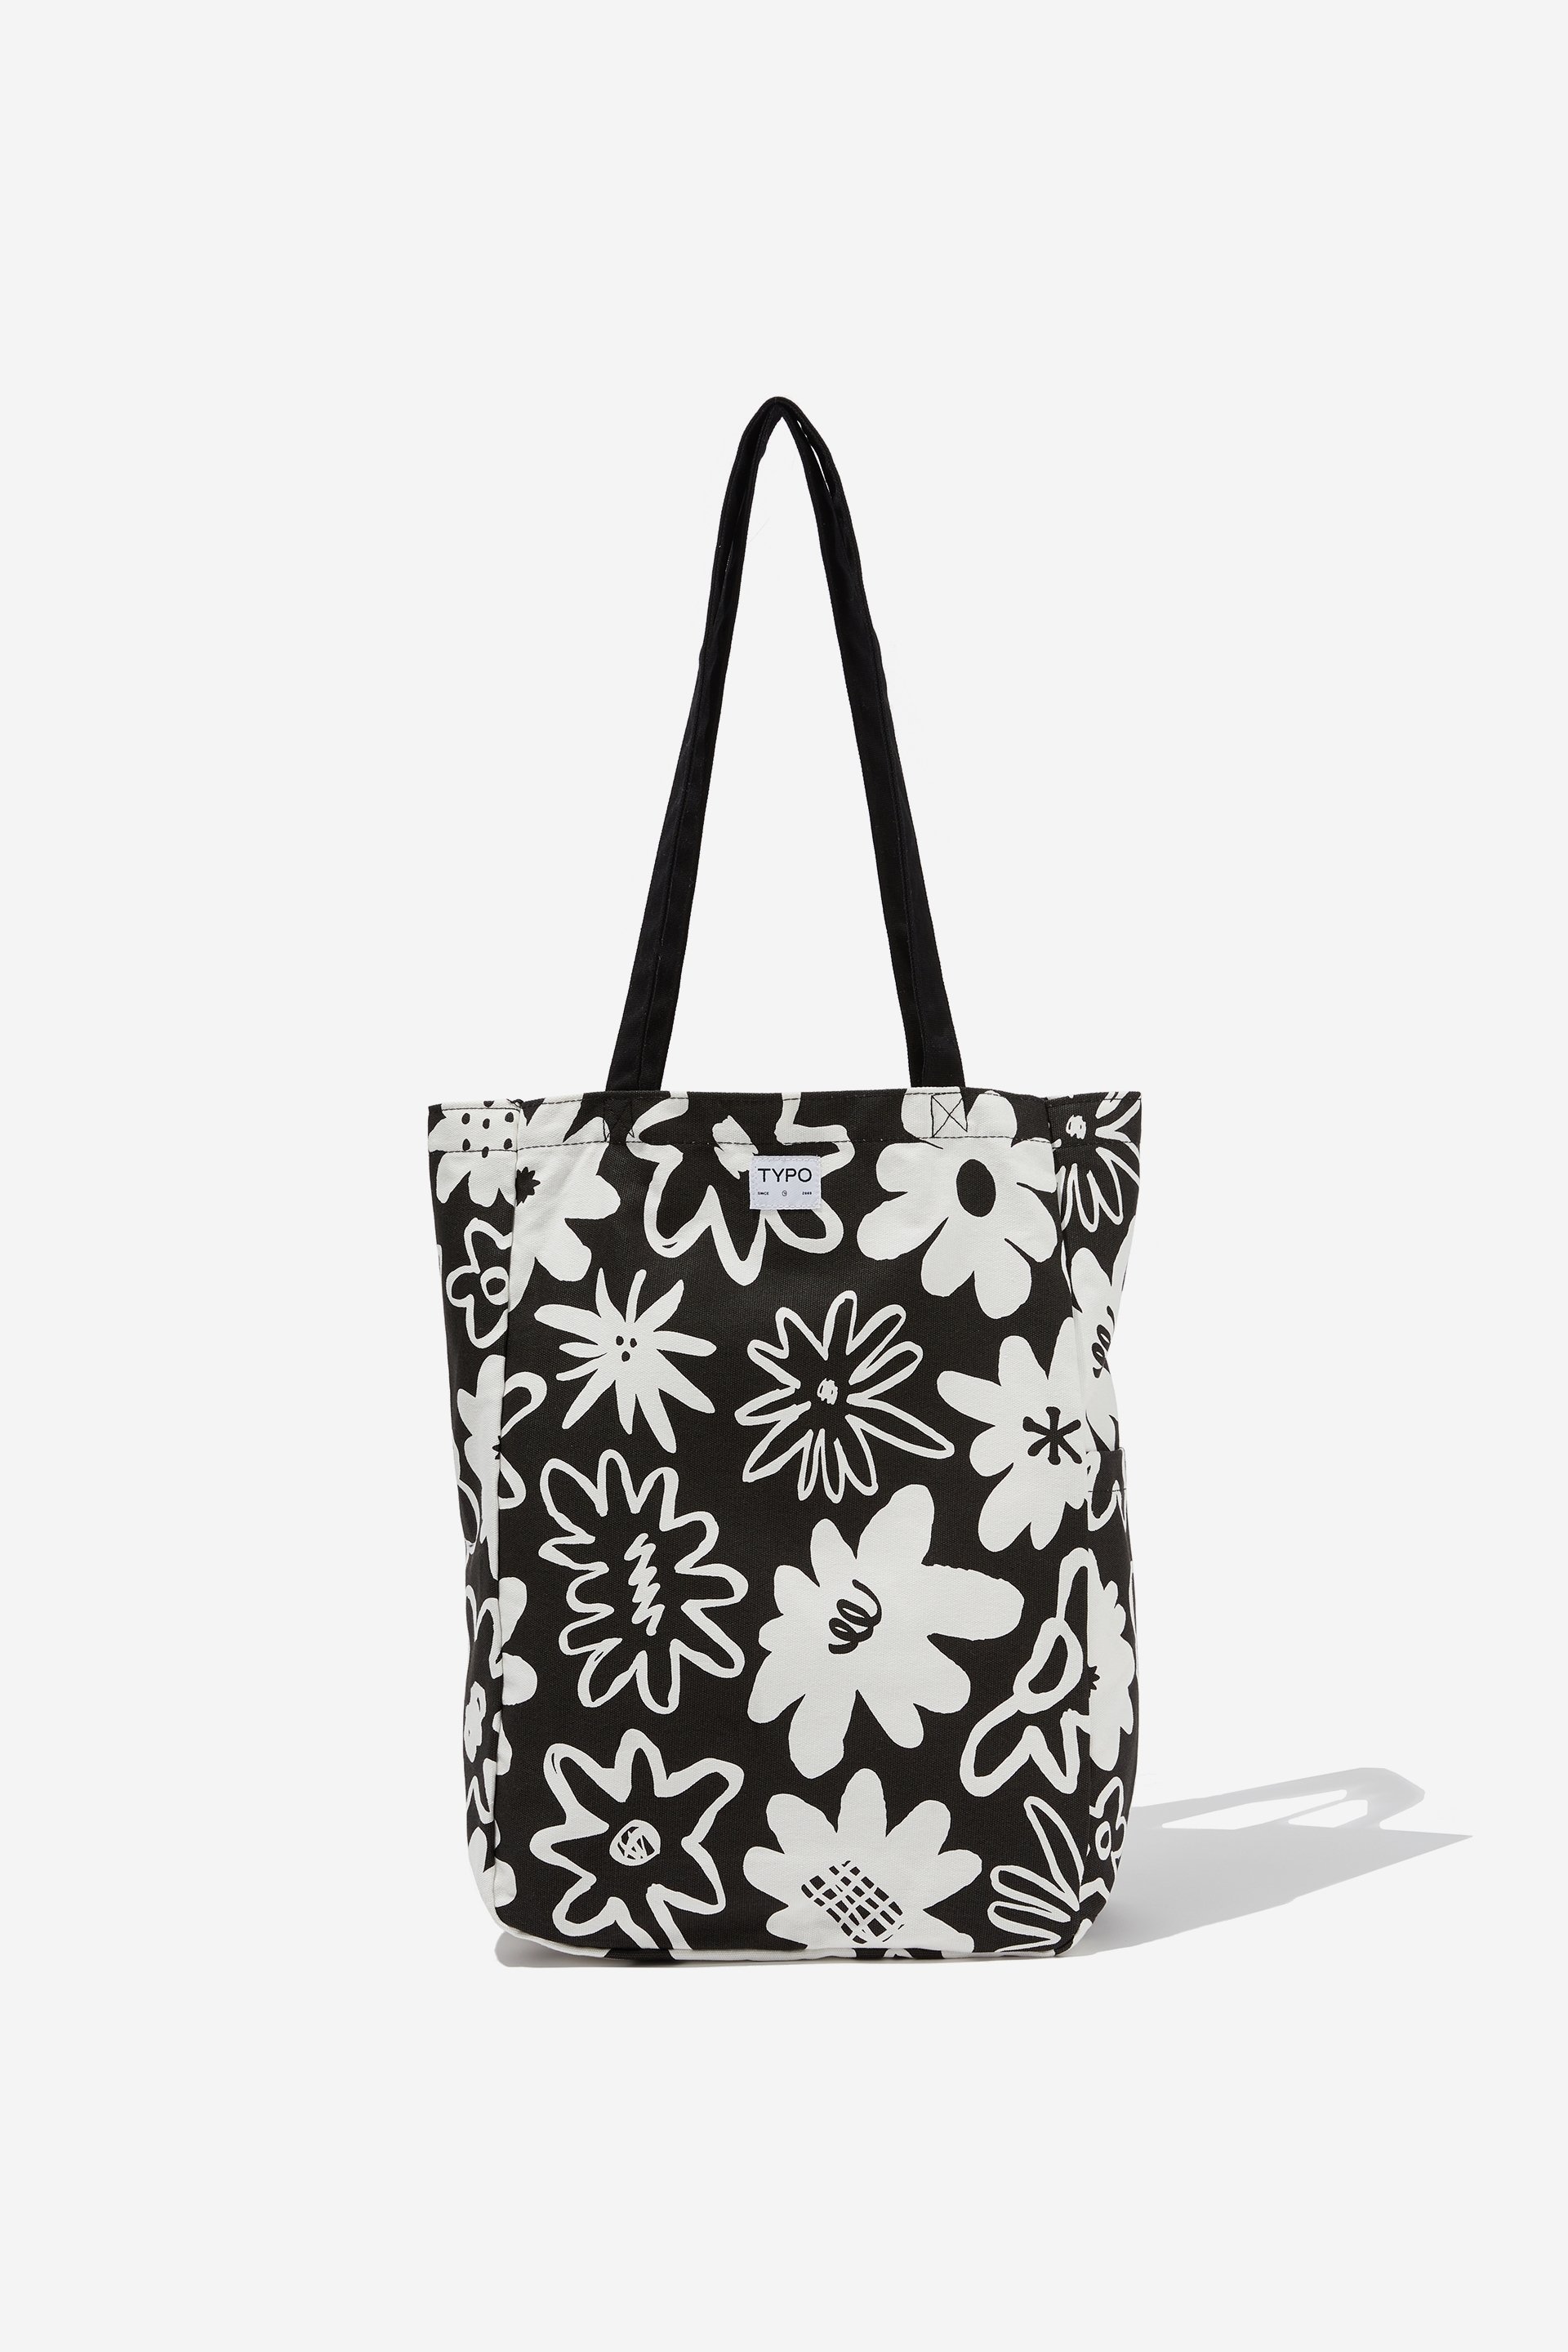 Typo - Art Tote Bag - Off White & Black